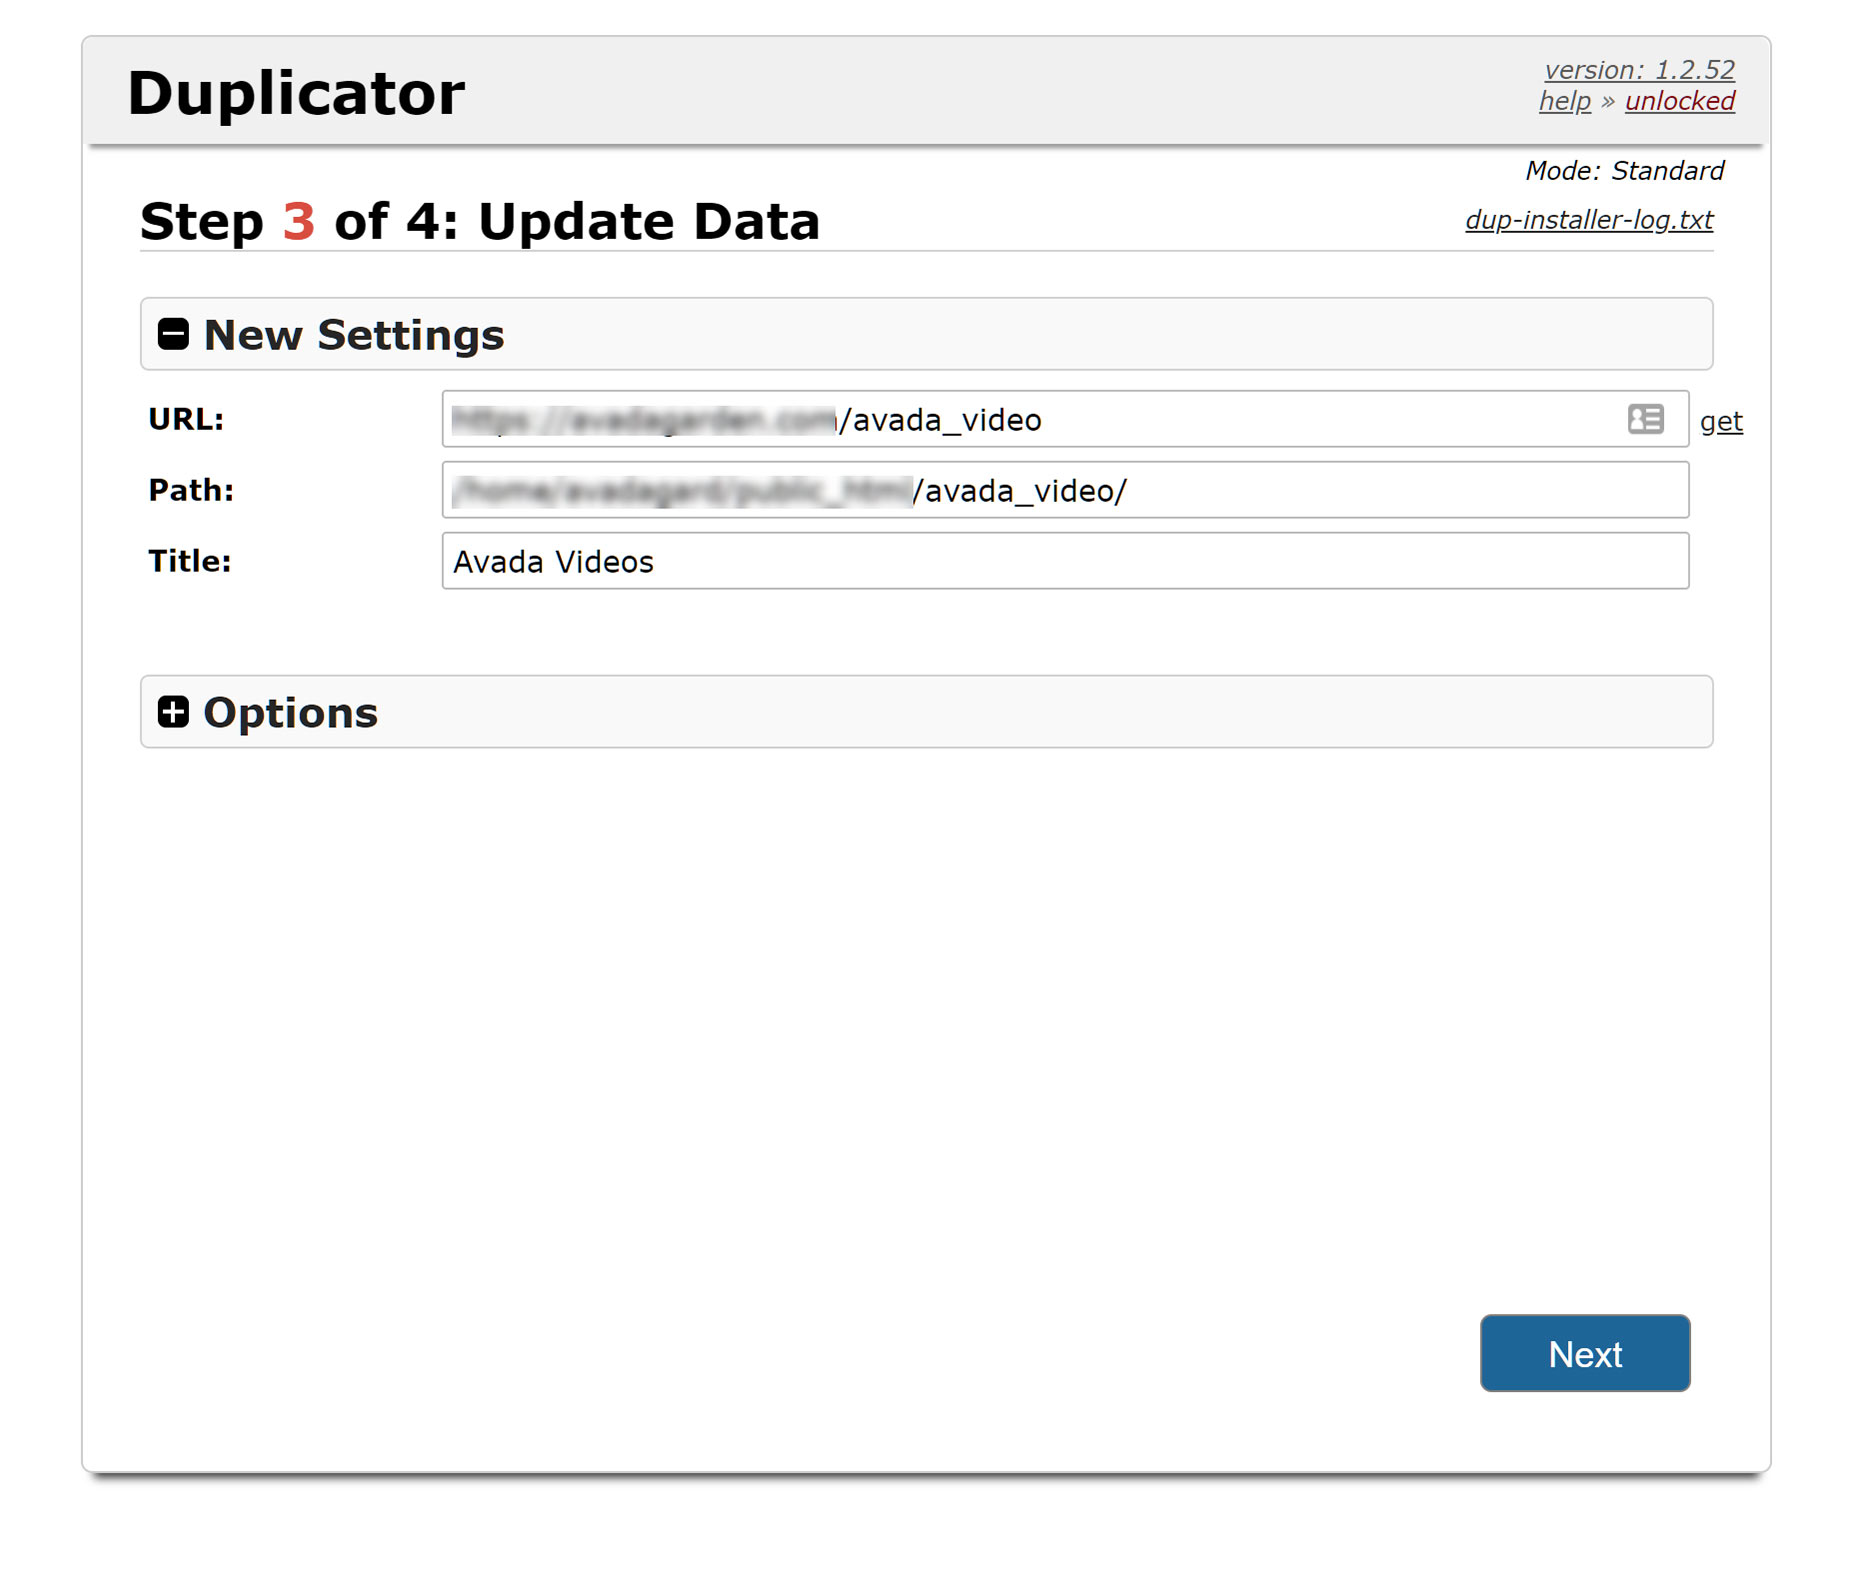 Duplicator - Update Data